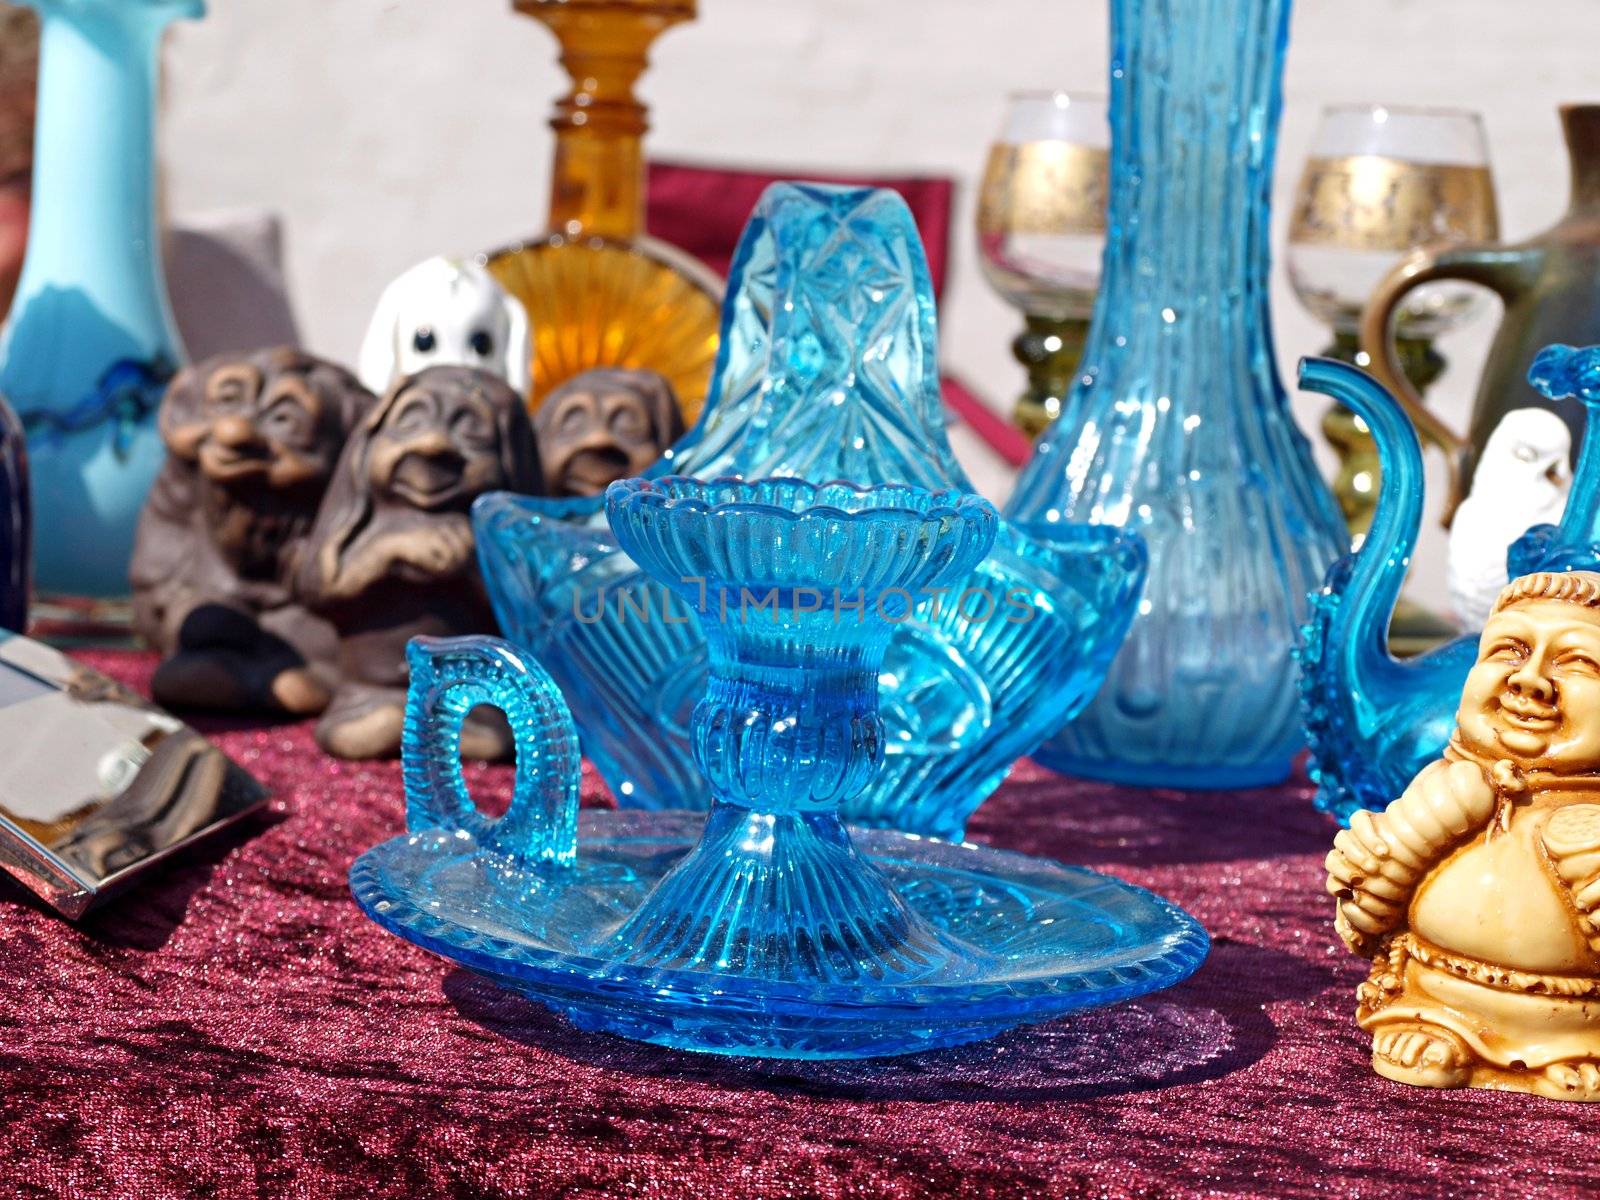 Blue glass items in a flea market stand in Denmark